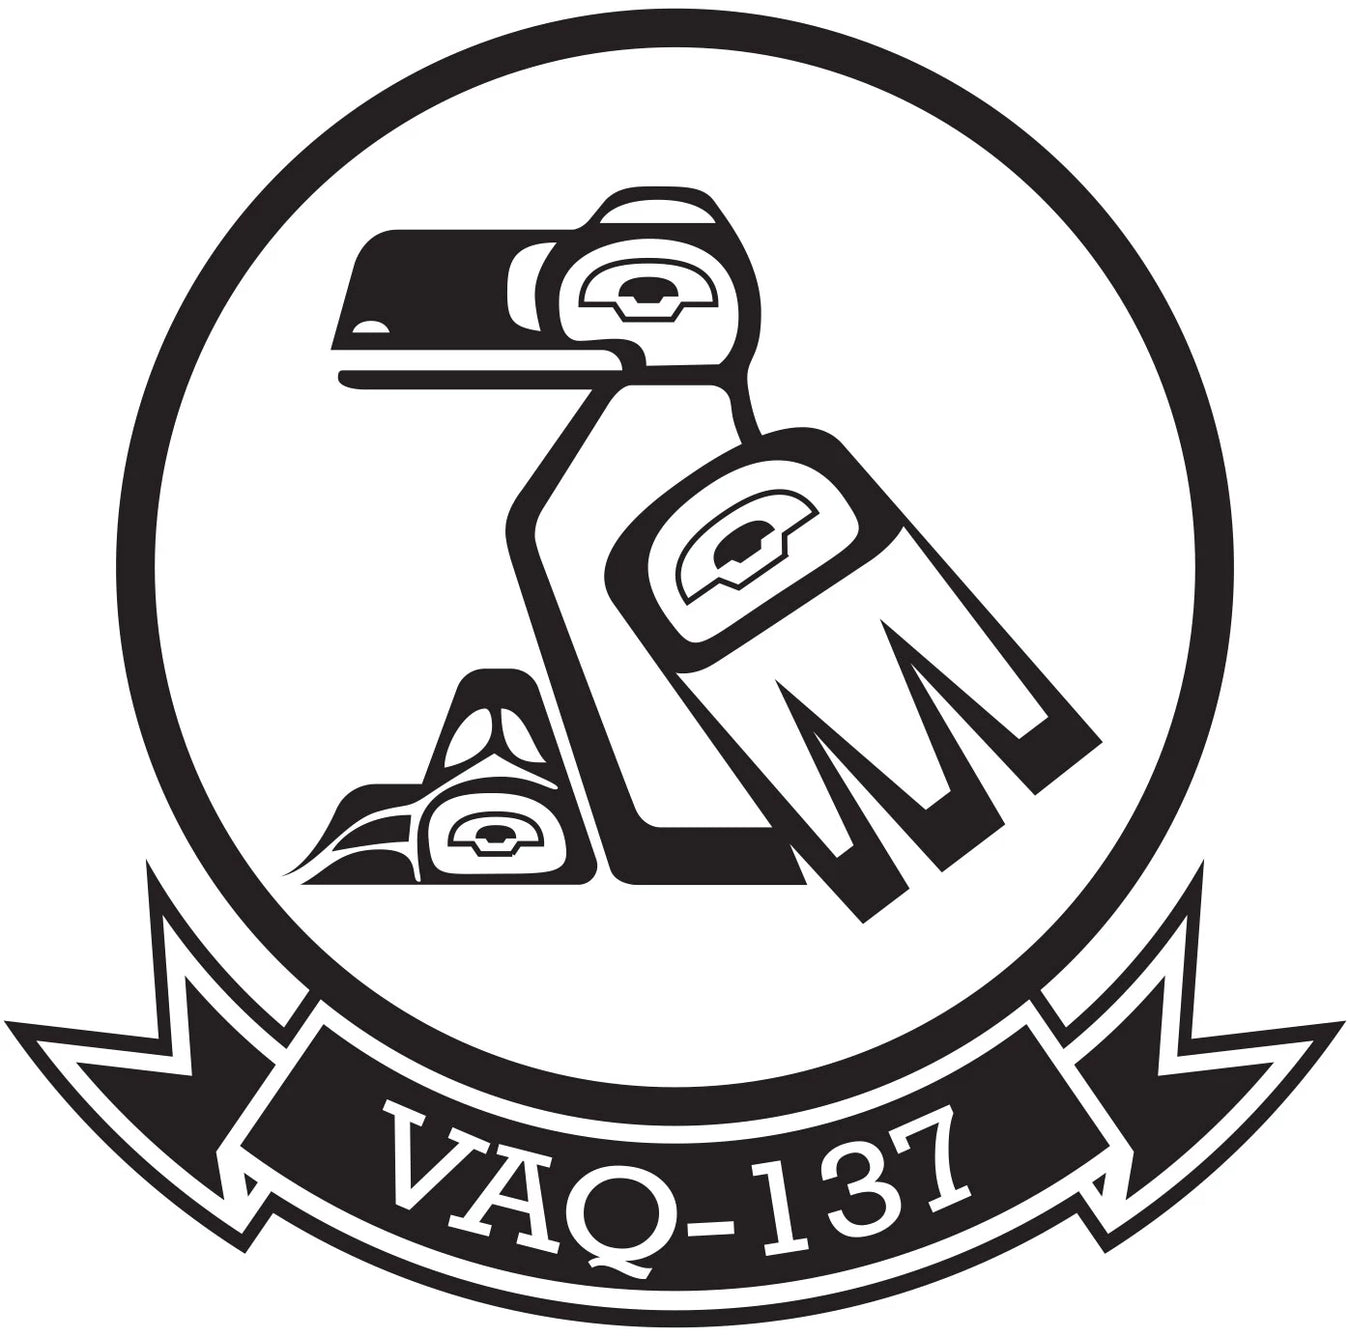 Electronic Attack Squadron 137 (VAQ-137)